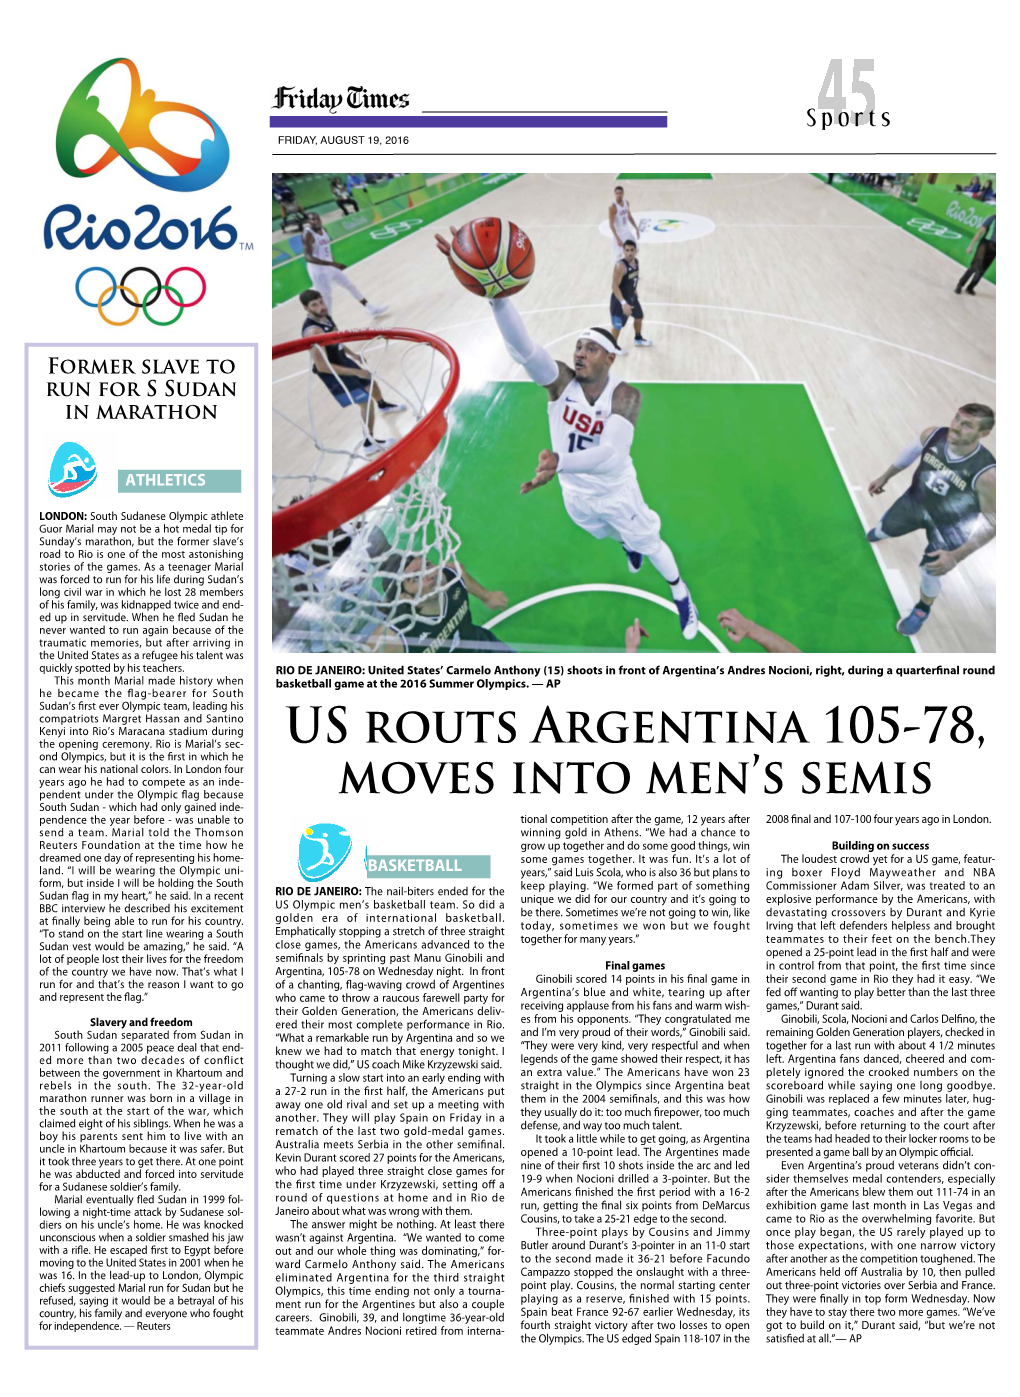 US Routs Argentina 105-78, Moves Into MEN's Semis